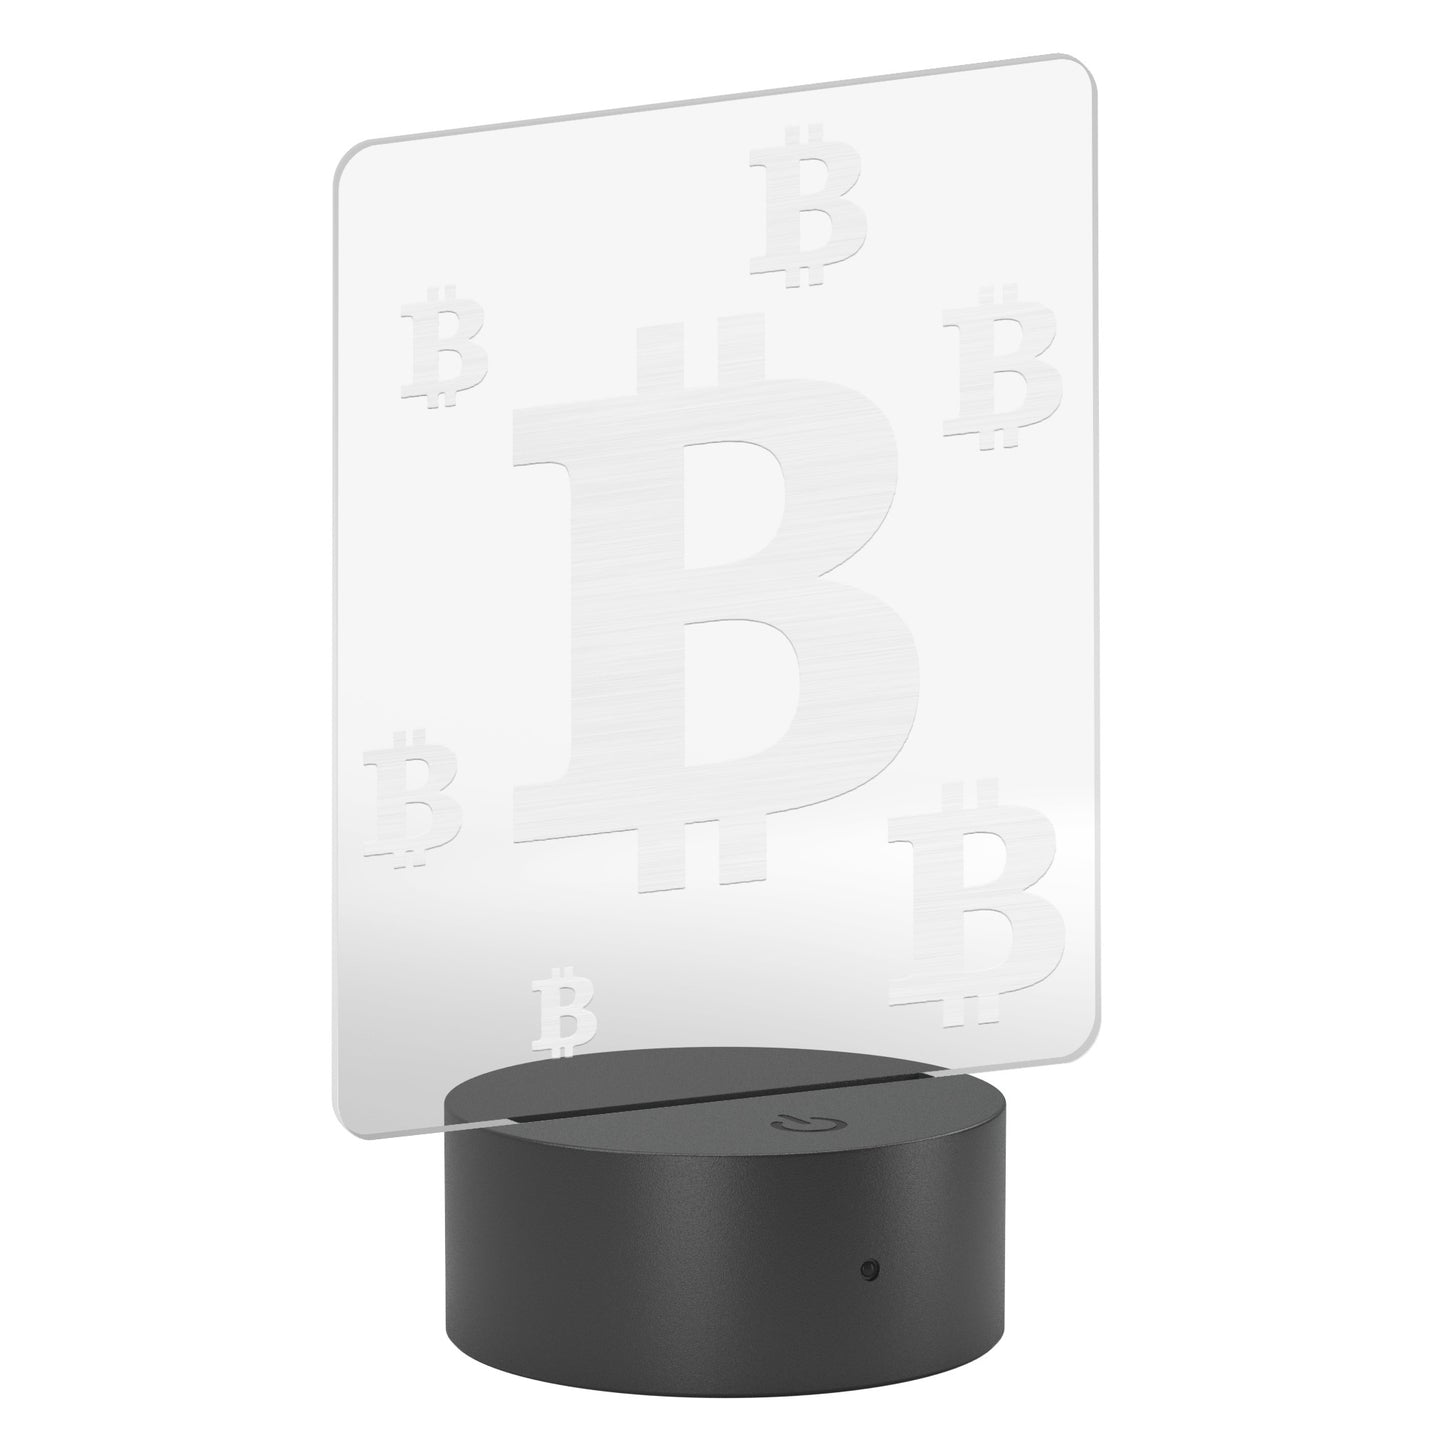 Bitcoin Led Sign